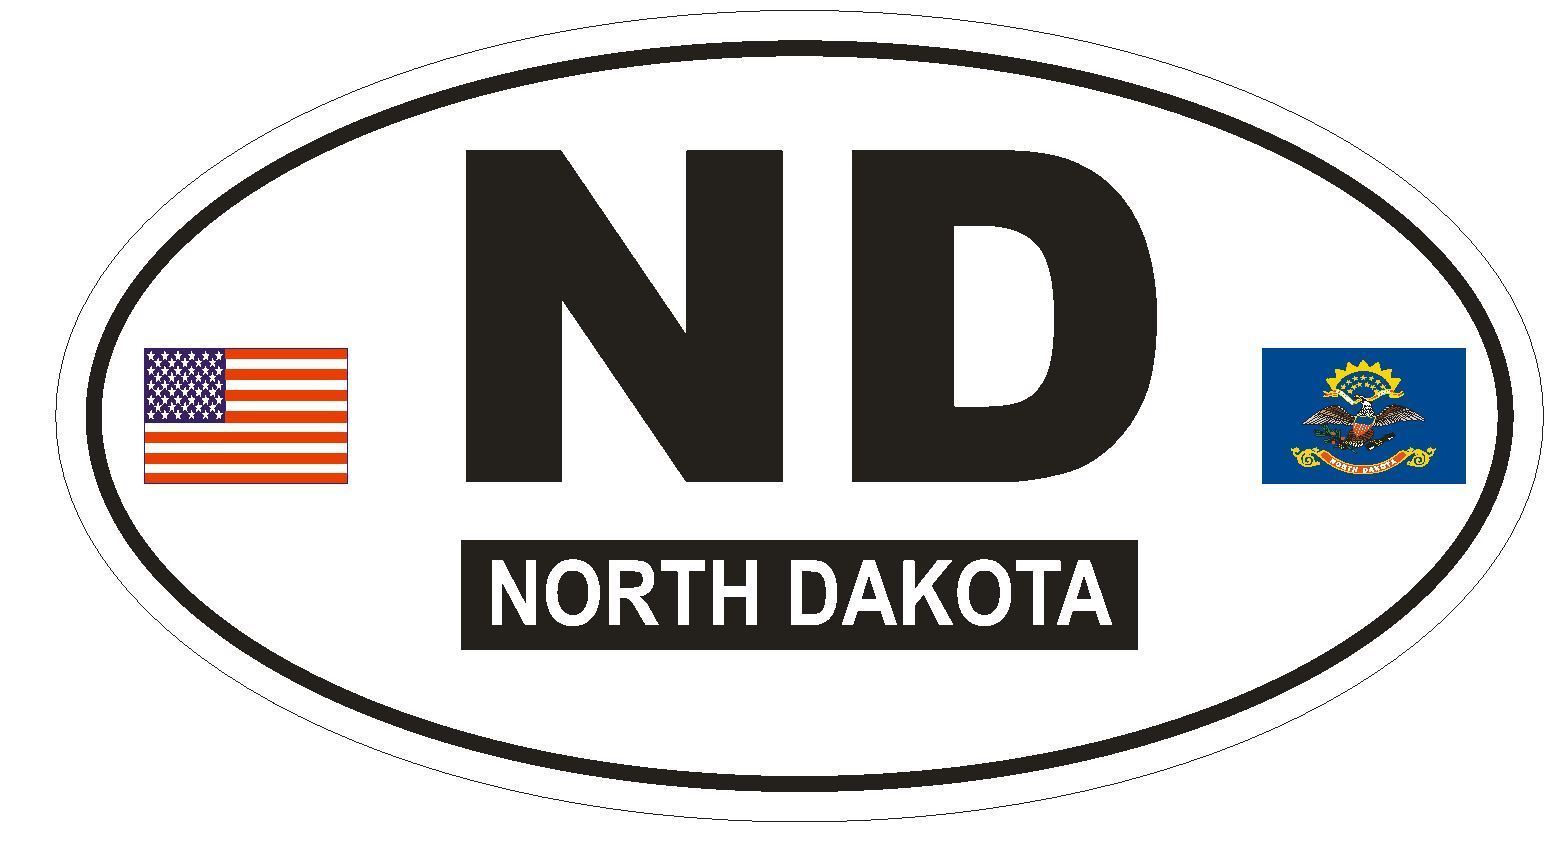 ND North Dakota Oval Bumper Sticker or Helmet Sticker D780 Euro Oval with Flags - $1.39 - $75.00